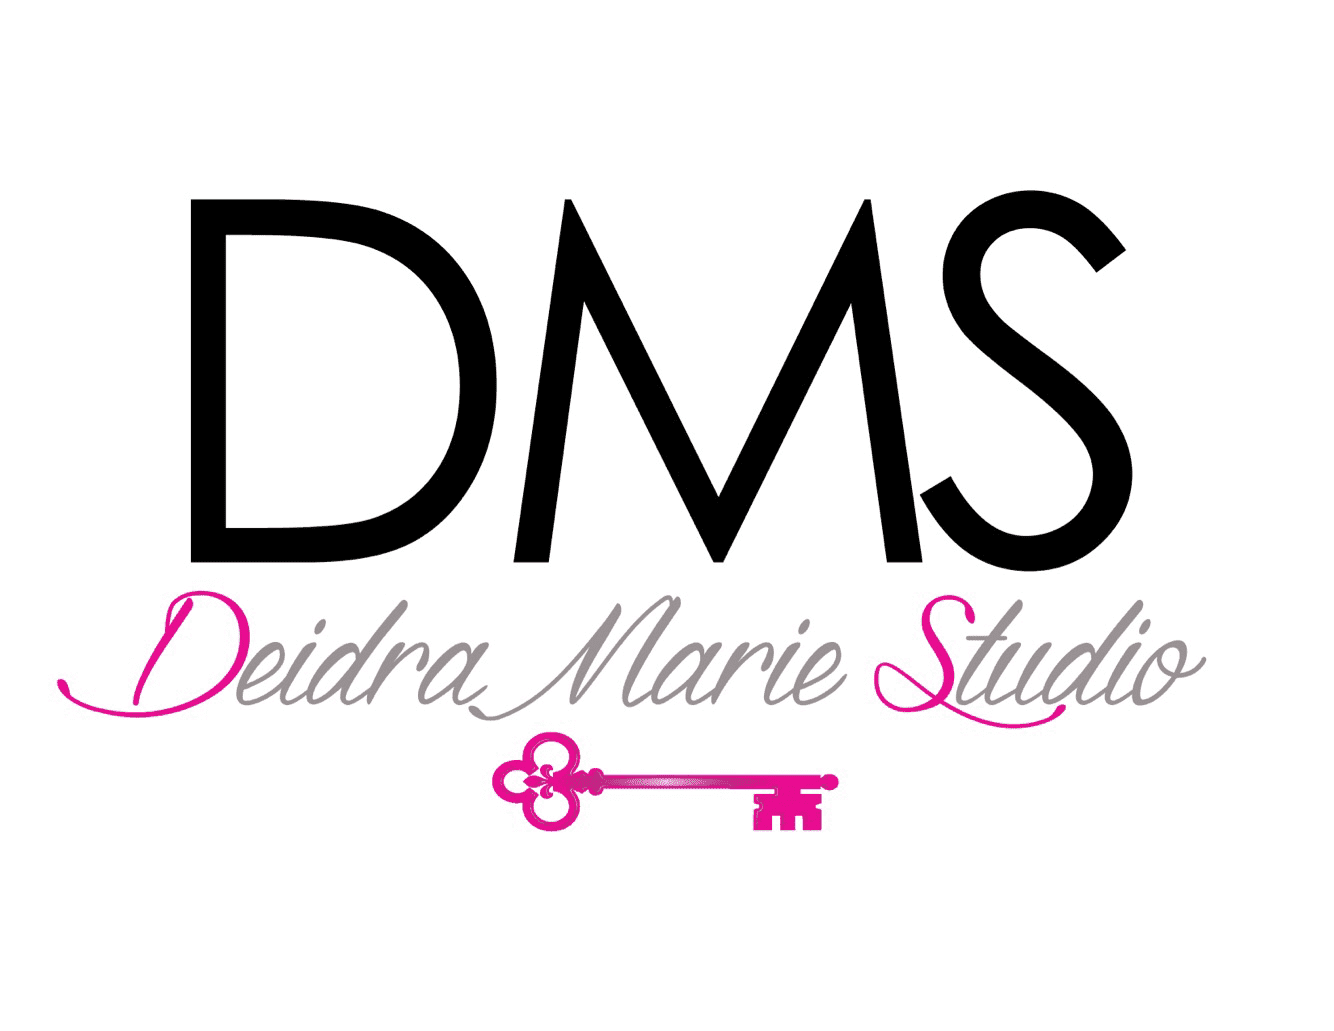 Deidra Marie Studio